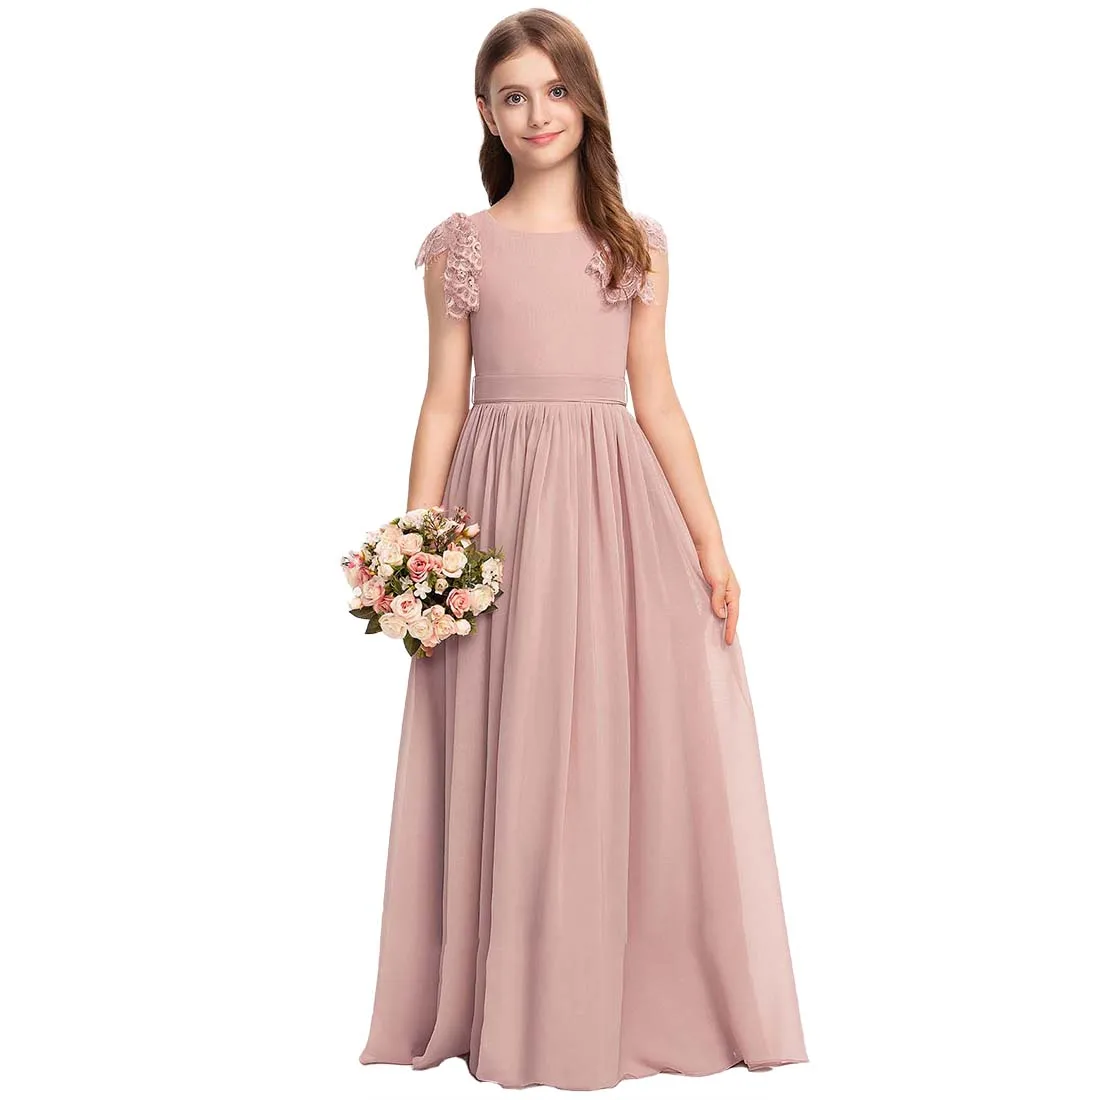 yzymanualroom-flower-girl-dress-chiffon-lace-junior-bridesmaid-dress-with-bow-4-15t（18-colors